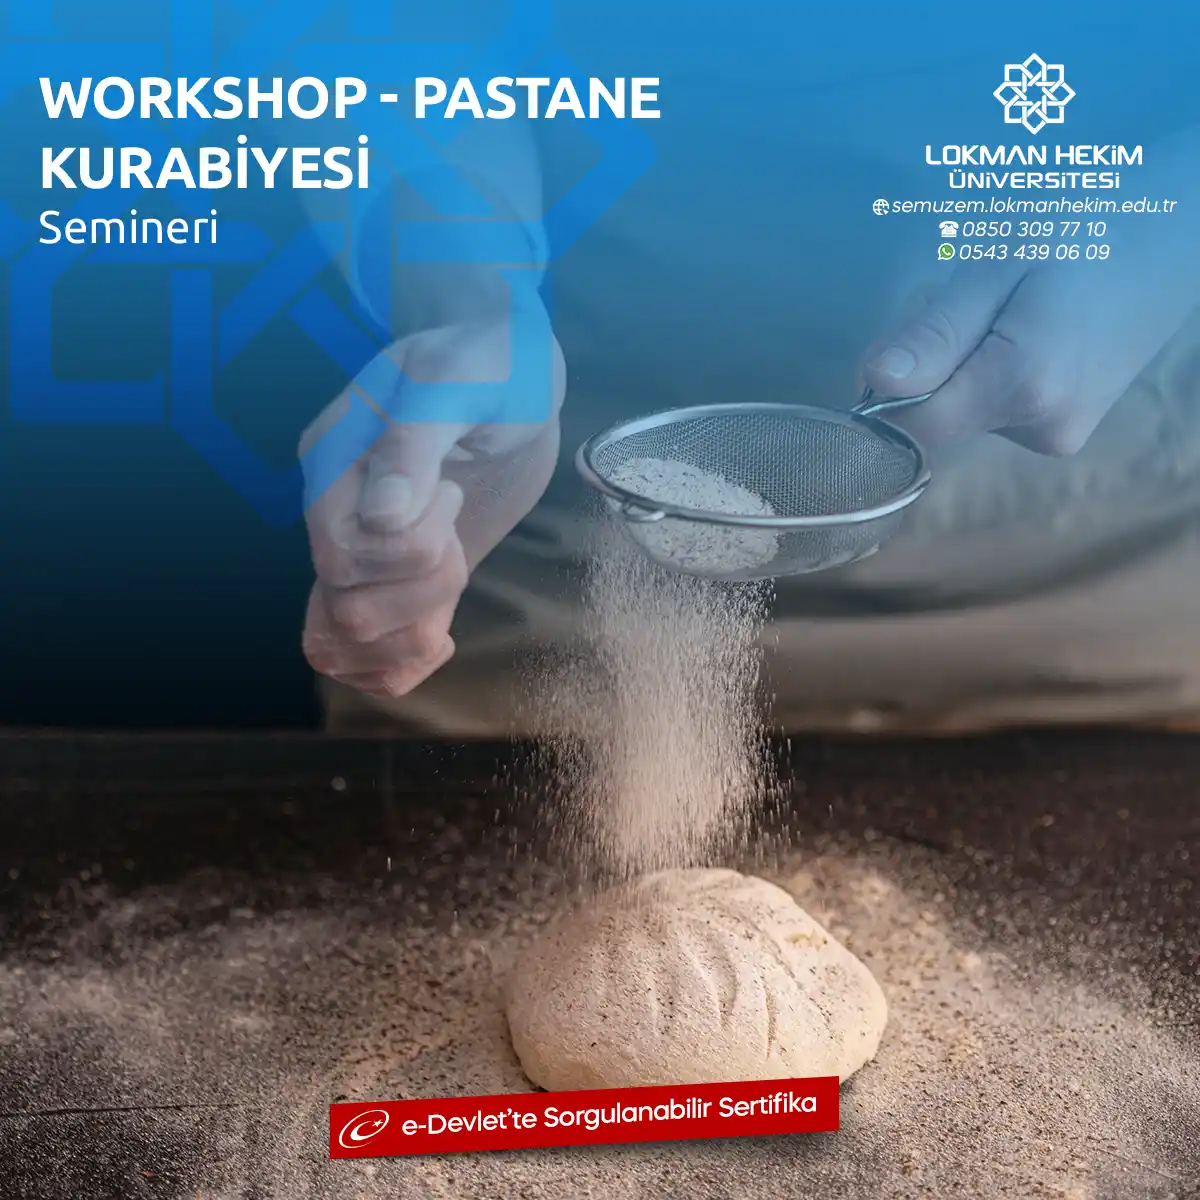 Workshop - Pastane Kurabiyesi Semineri